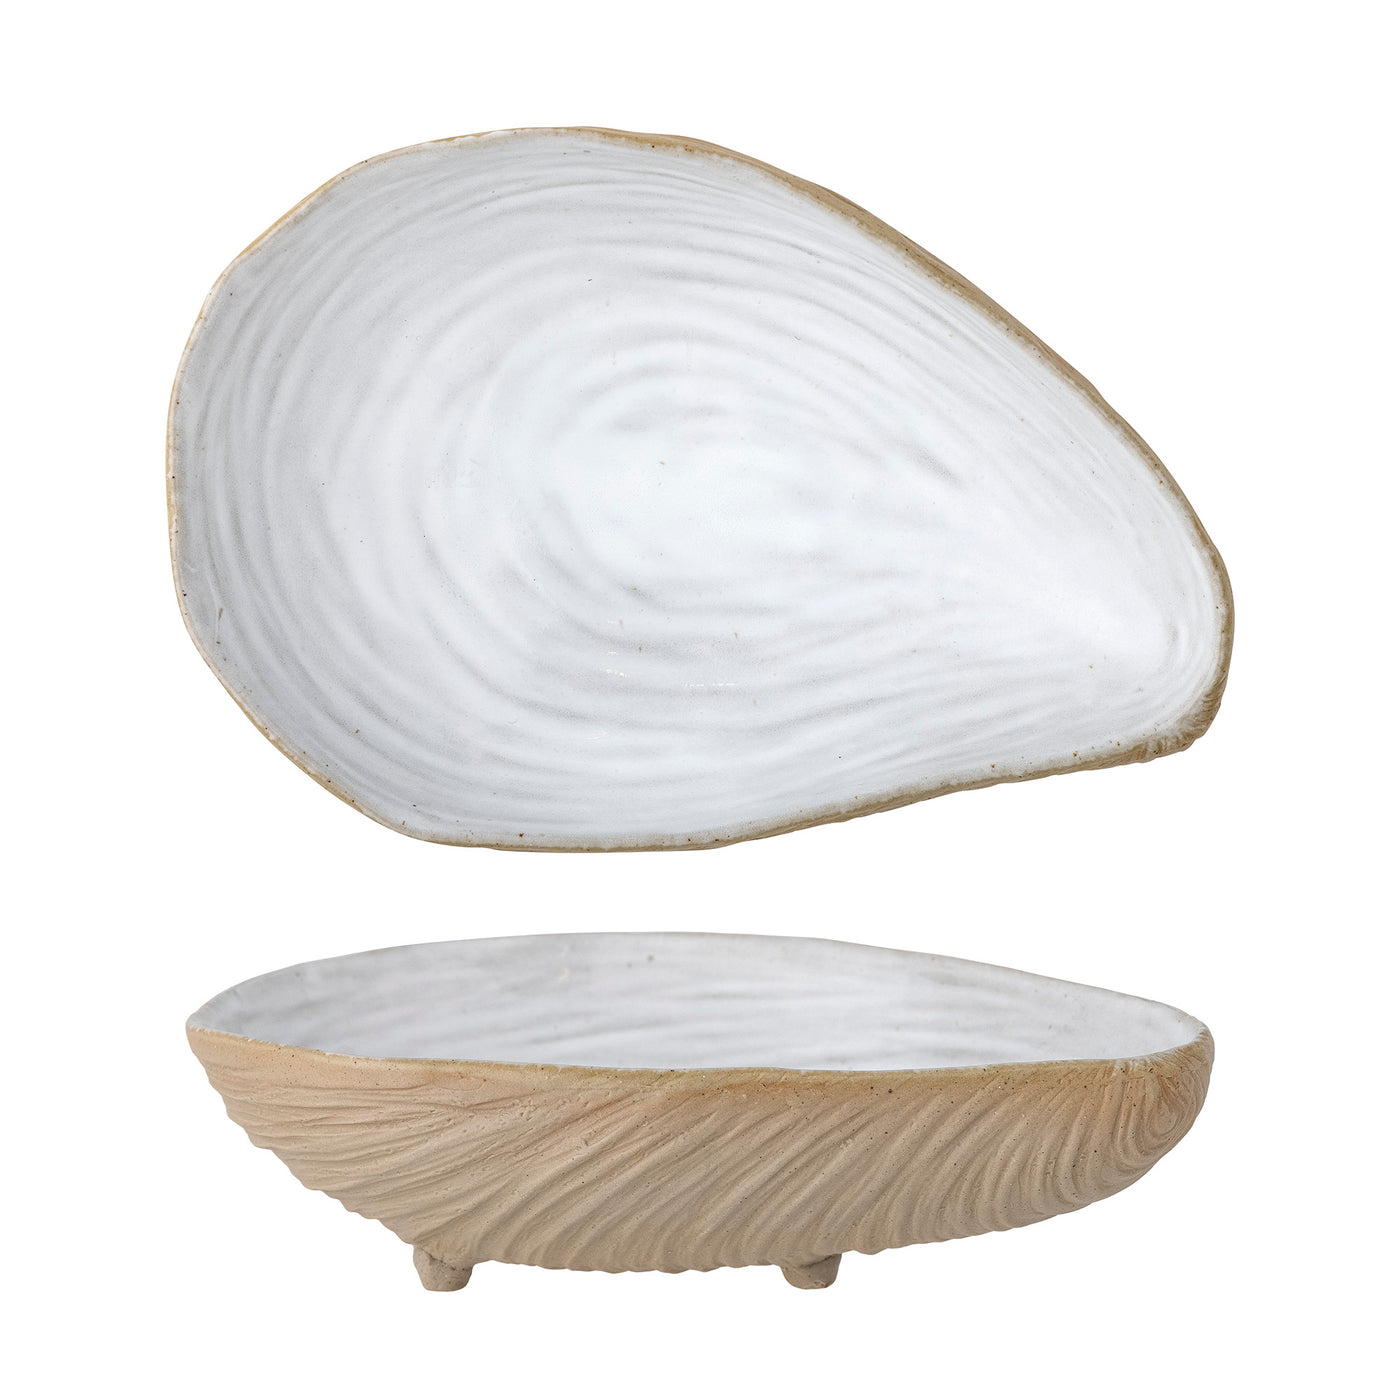 Seashell dish with legs